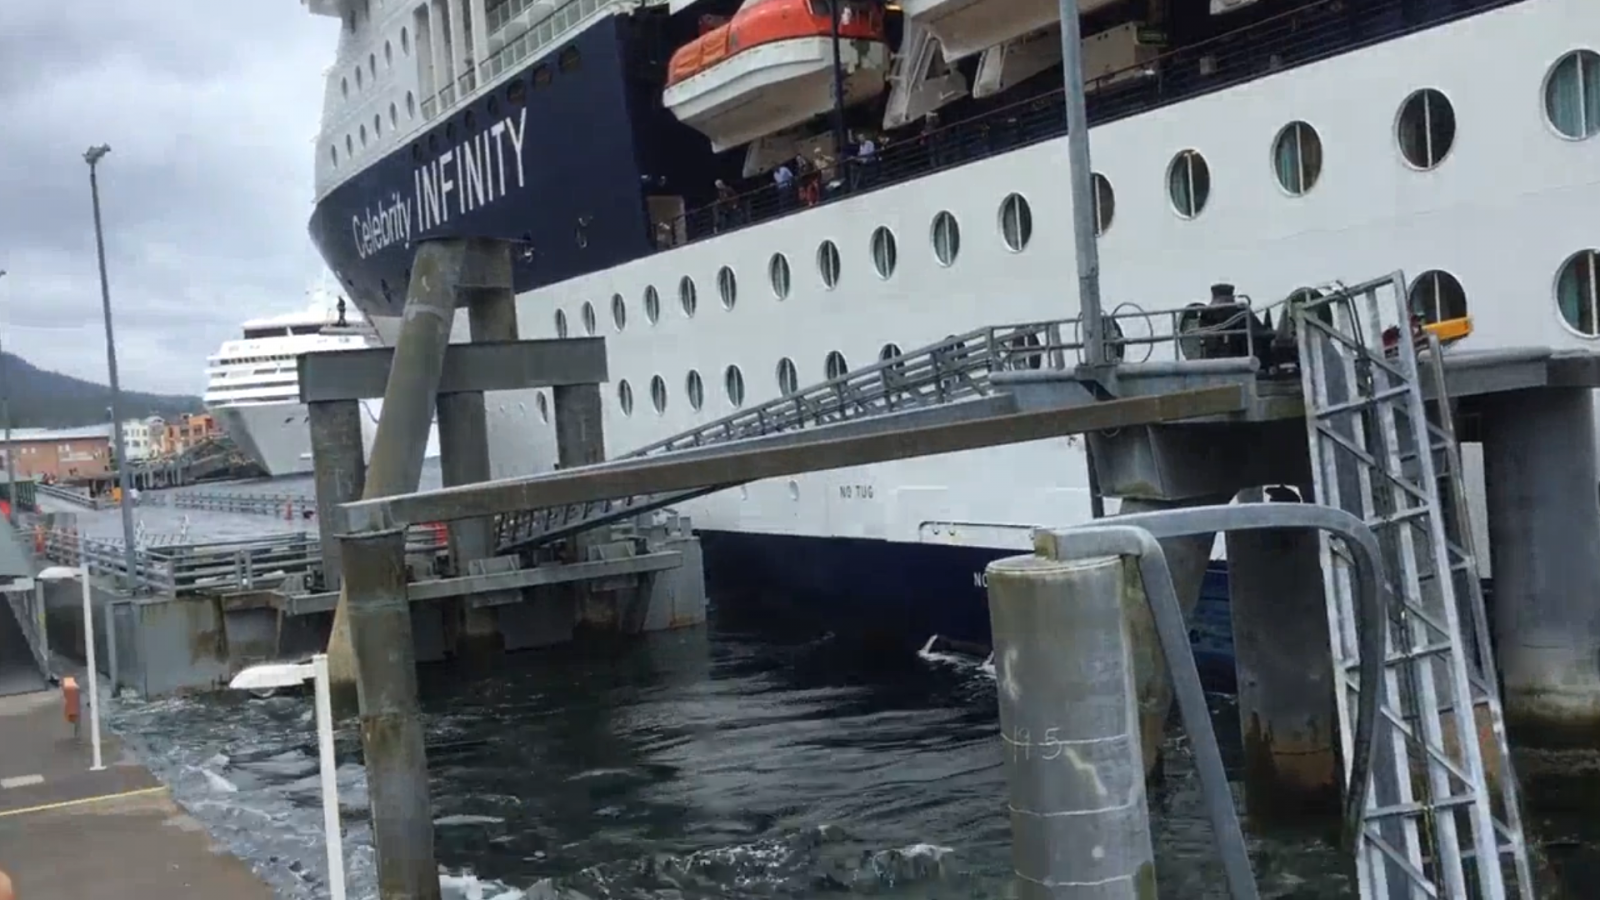 Watch moment cruise ship crashes into Alaska dock causing 2 million of